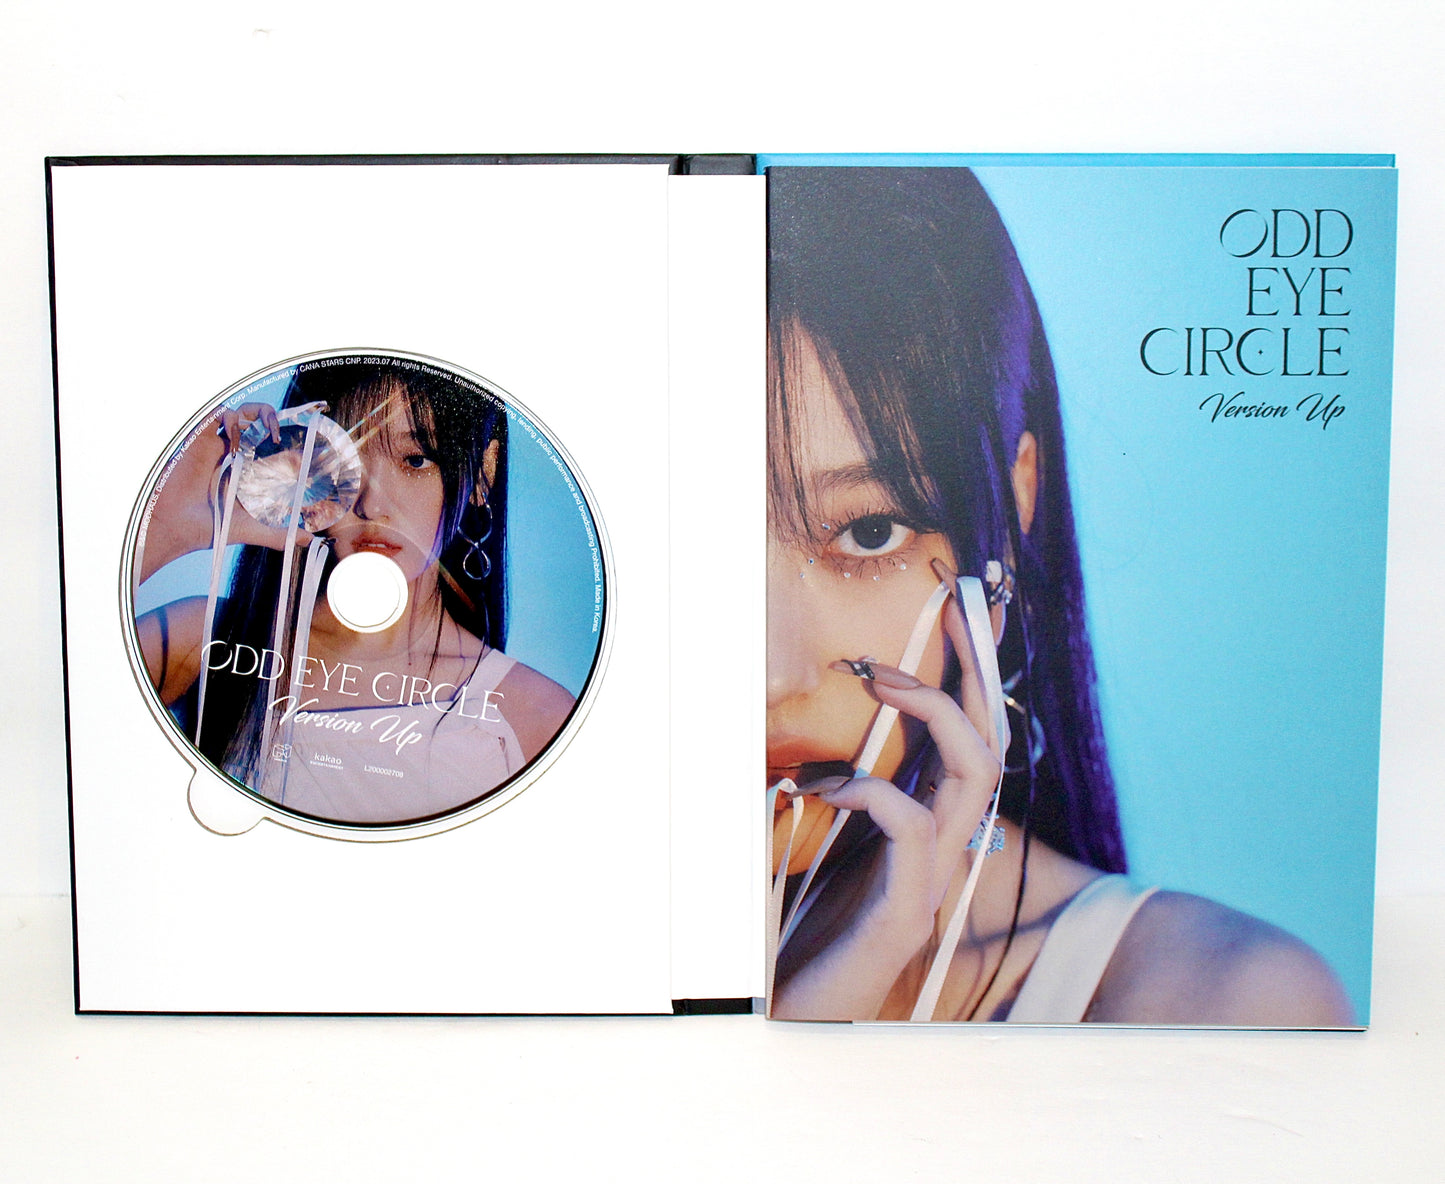 ODD EYE CIRCLE 2nd Mini Album: Version Up | Choerry Ver.